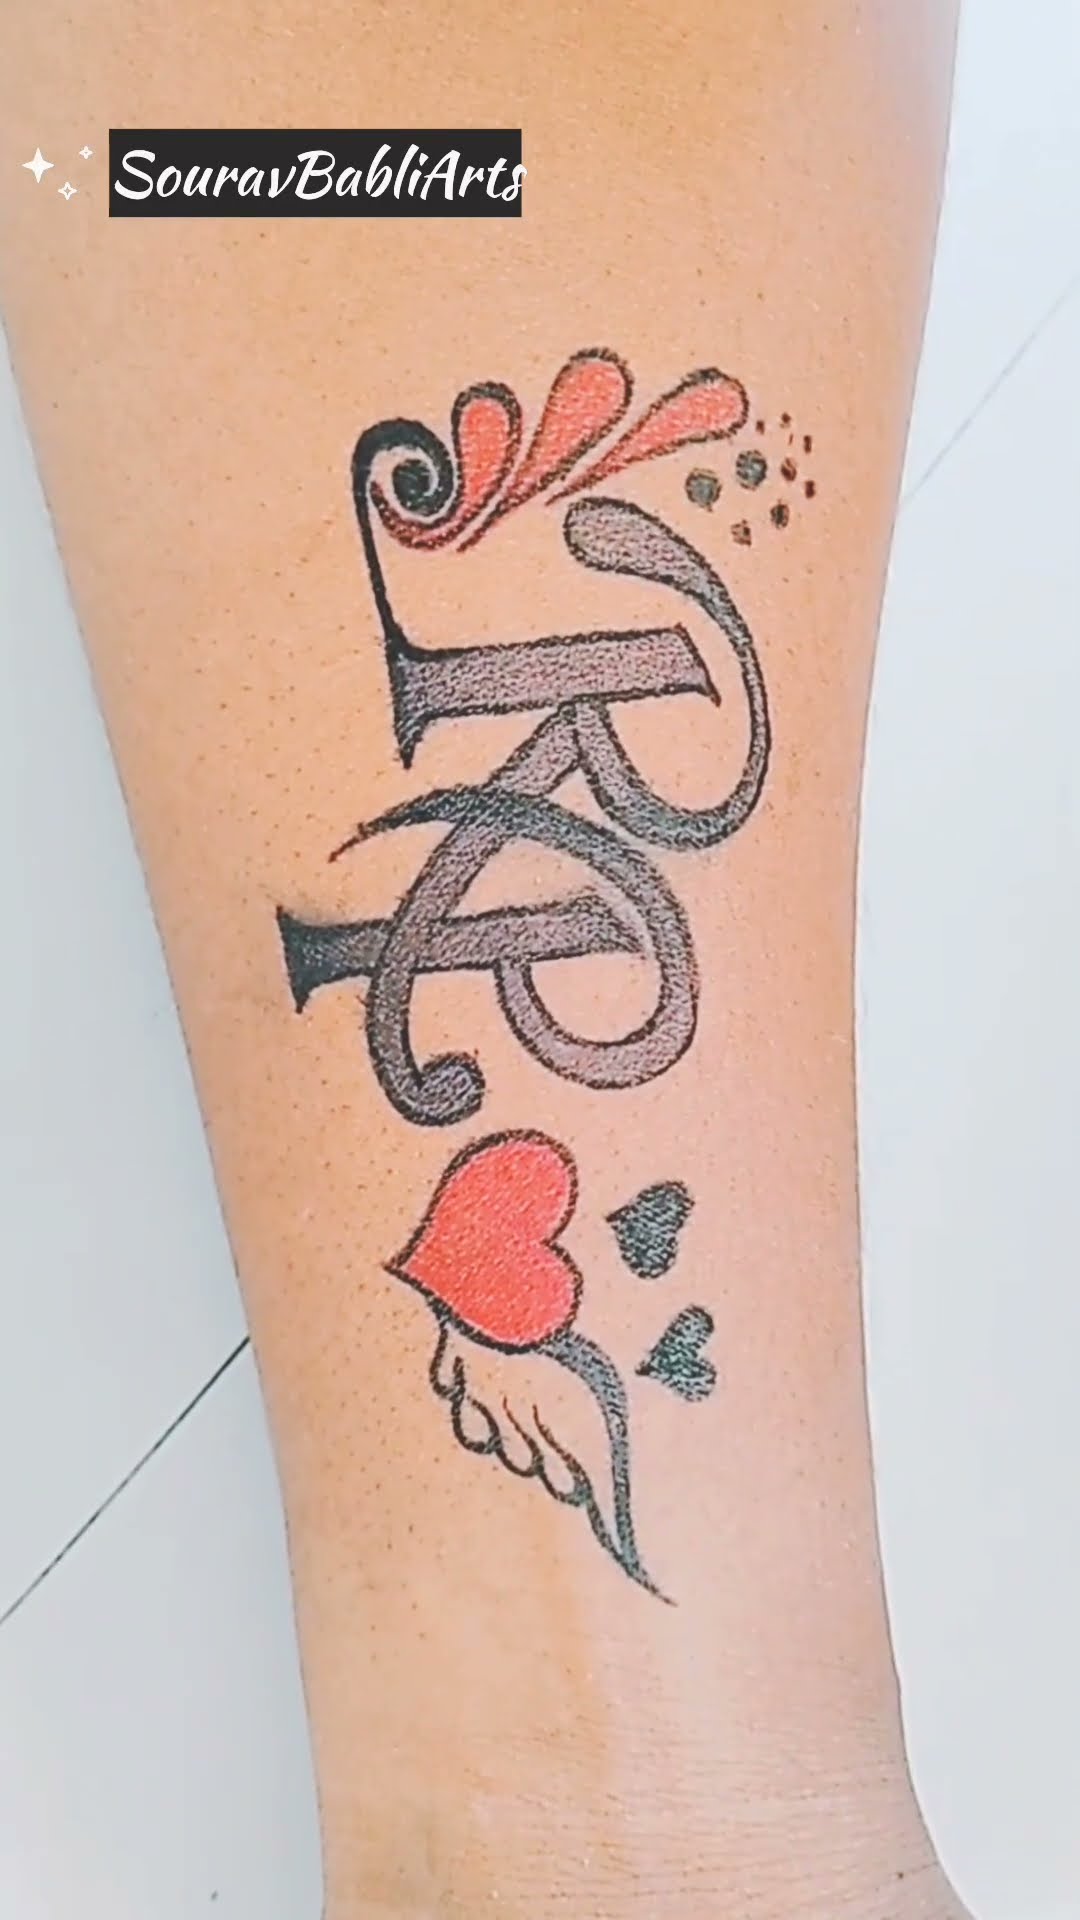 Tattoo uploaded by Eo R P Tatuador • Tattoodo